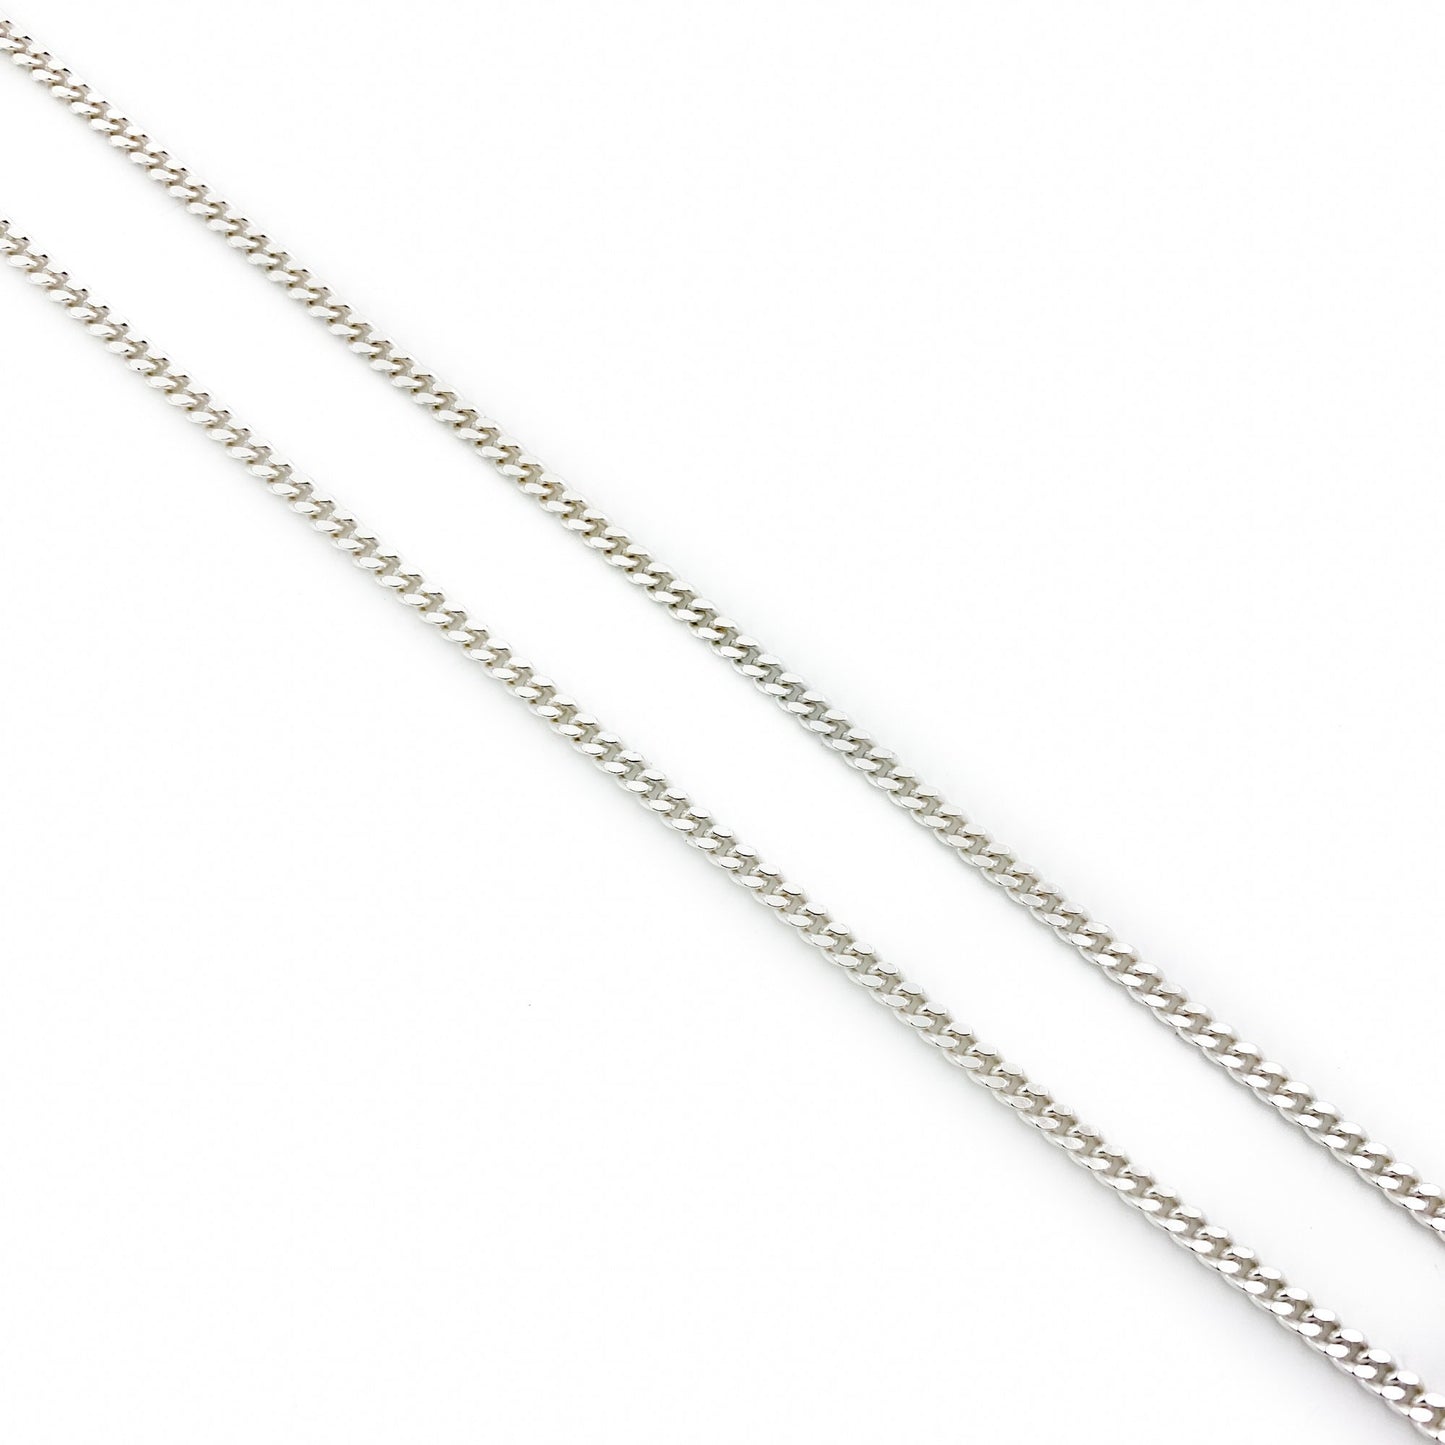 Silver Curb Link Necklace - Kingdom Jewelry